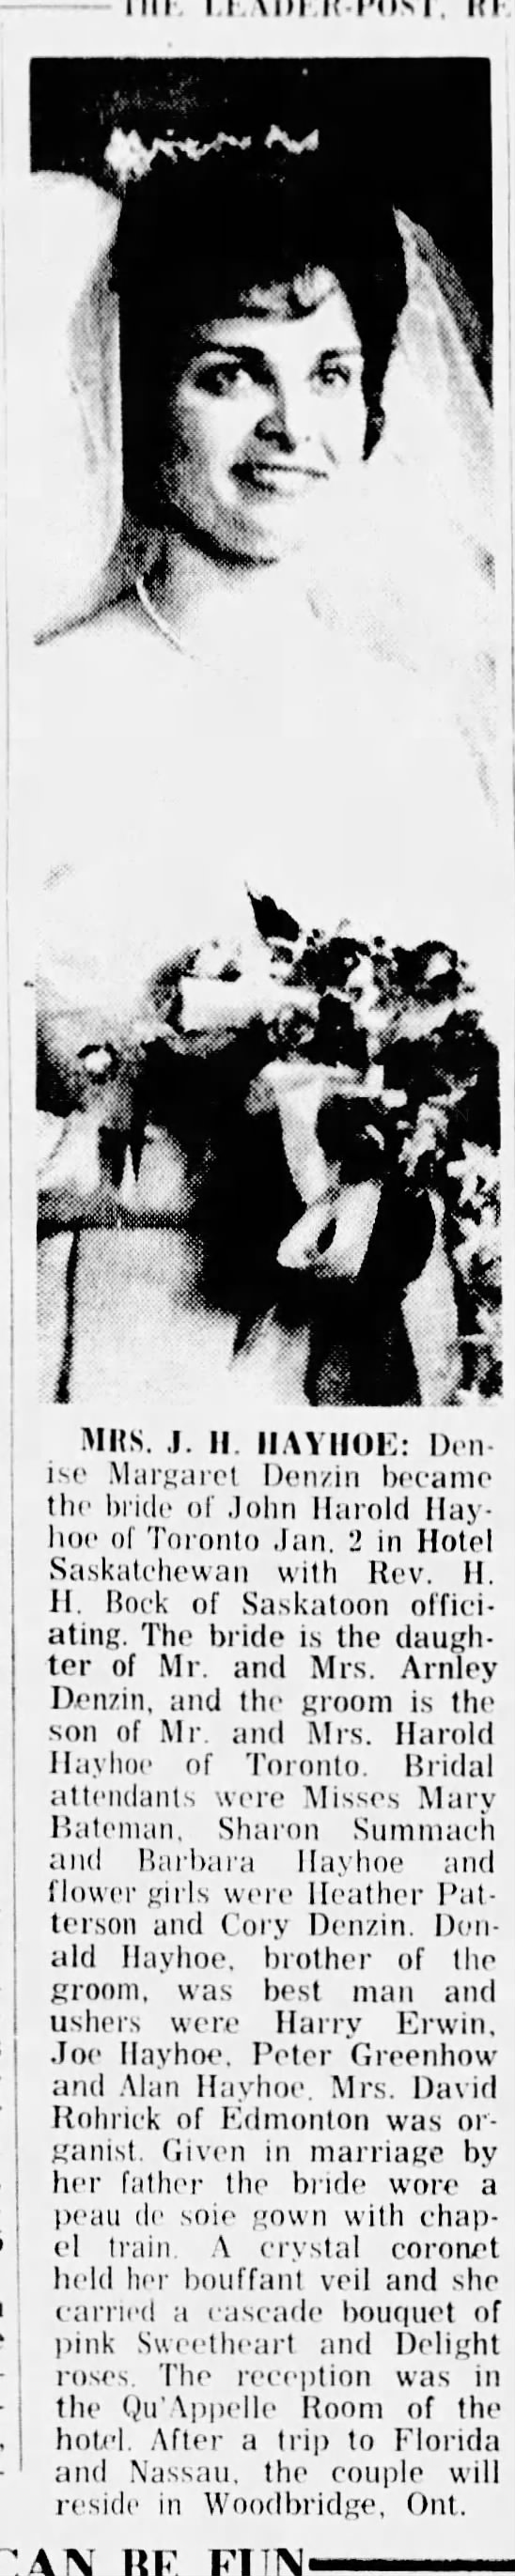 Marriage: Hayhoe--Denzin